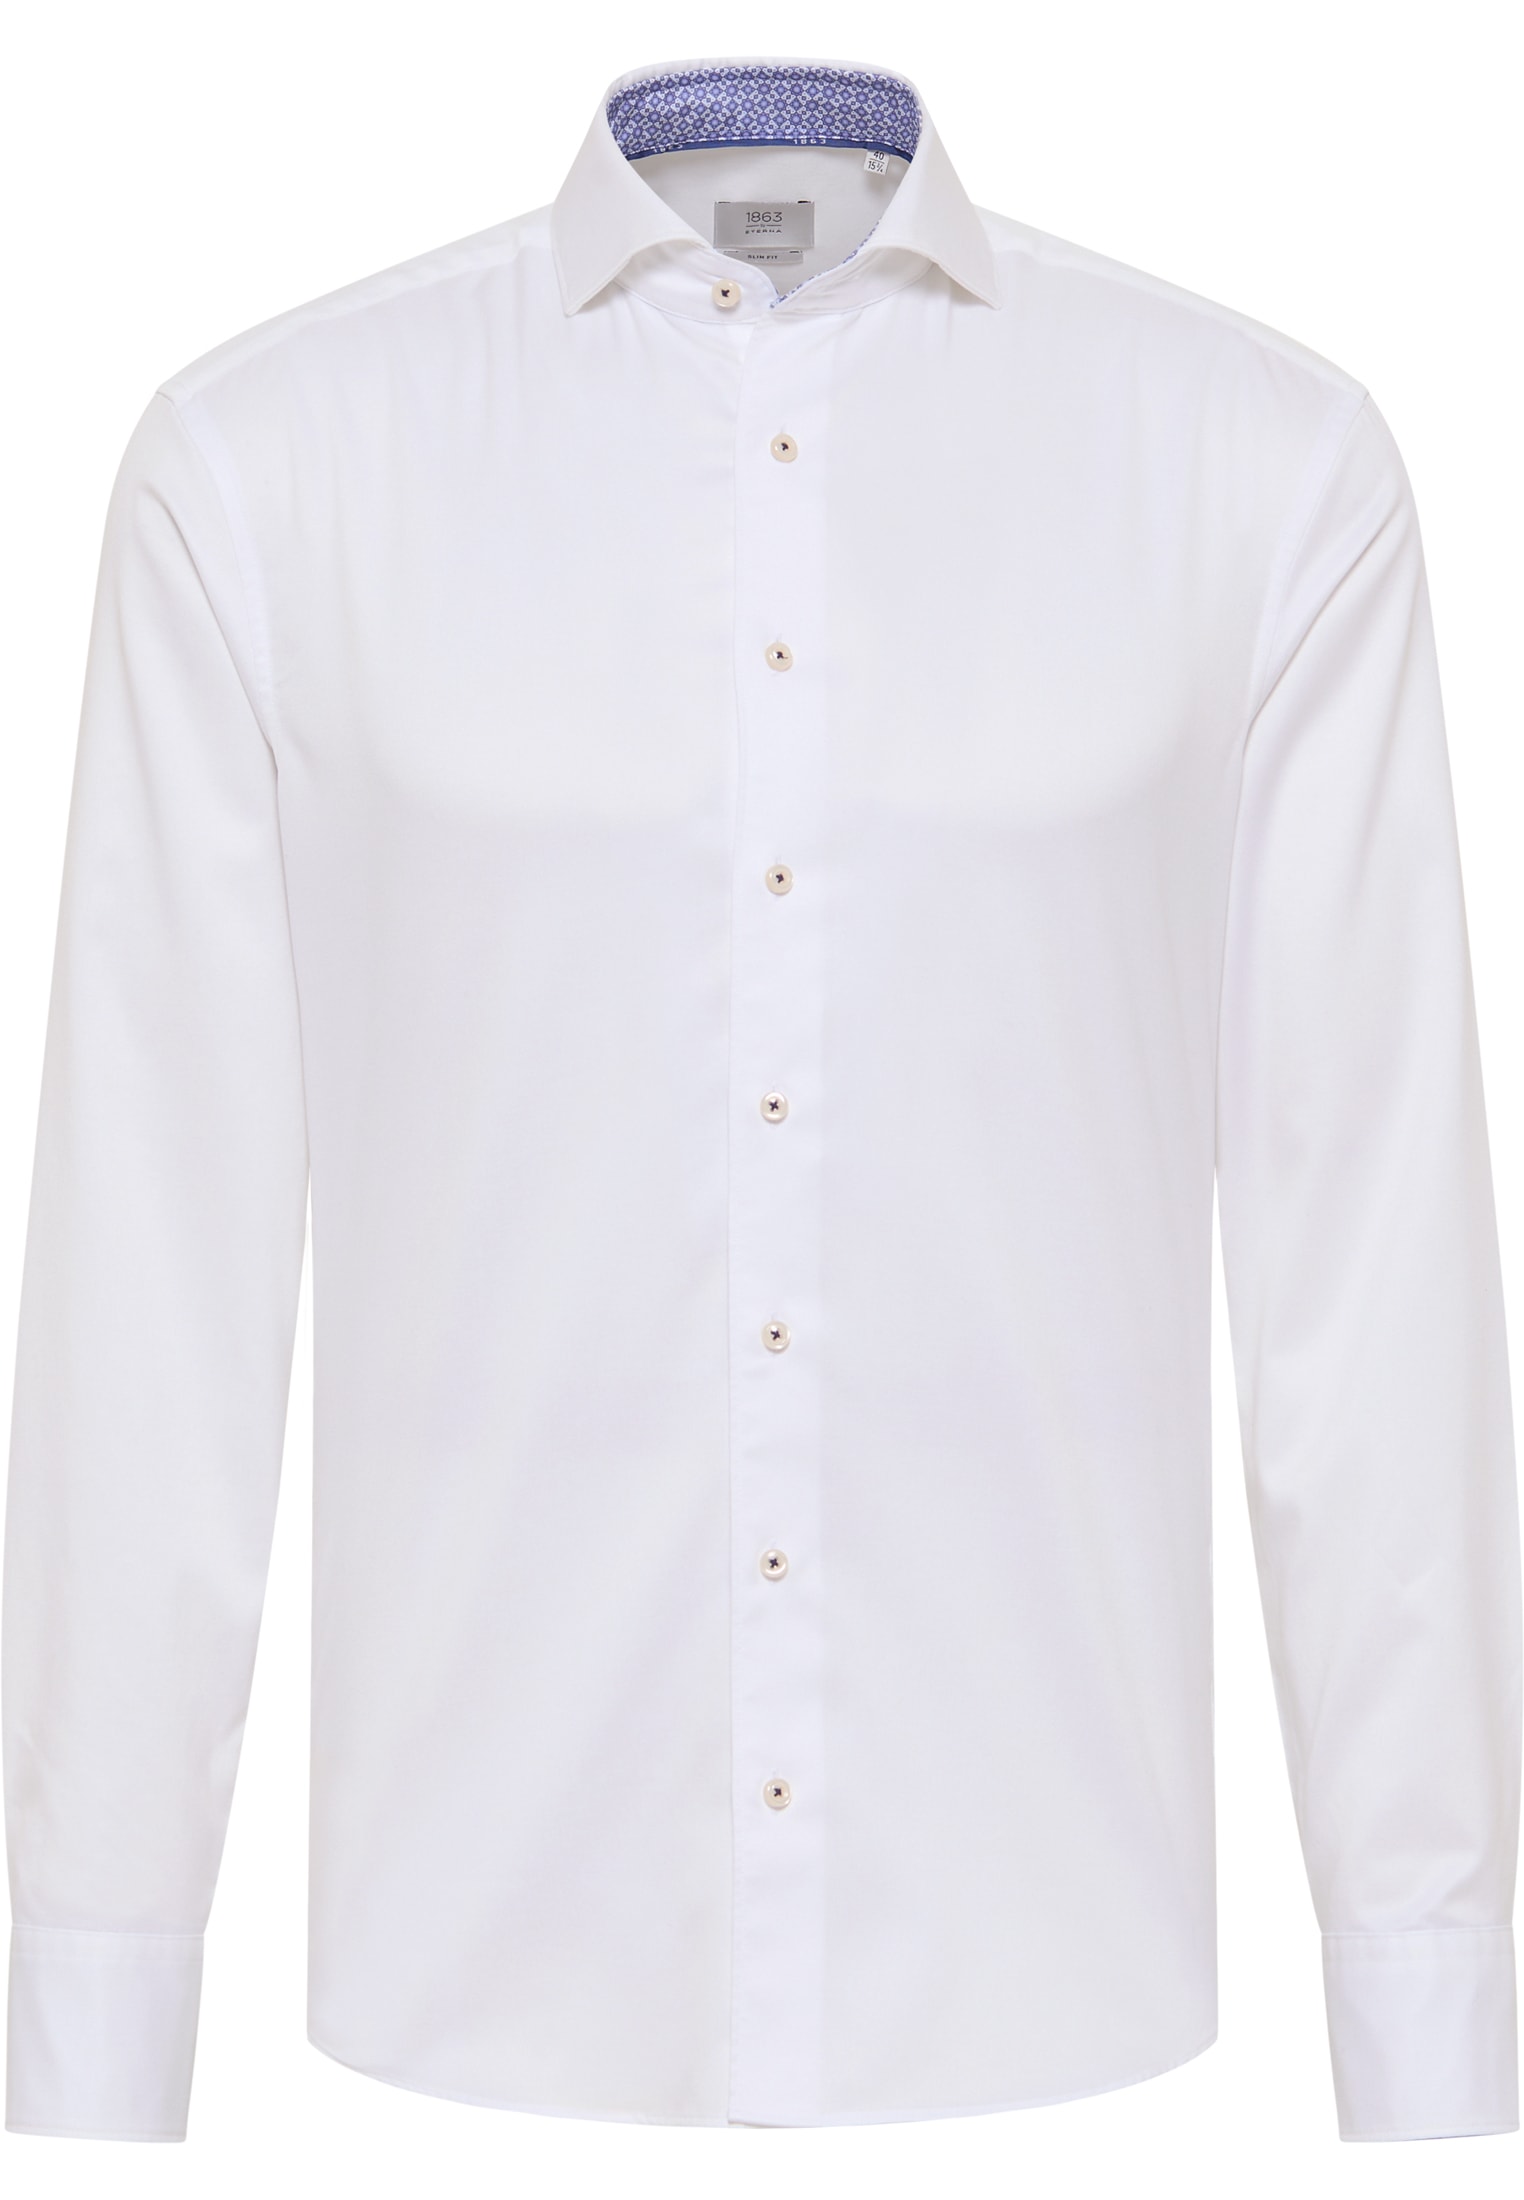 SLIM FIT Soft Luxury Shirt in off-white plain